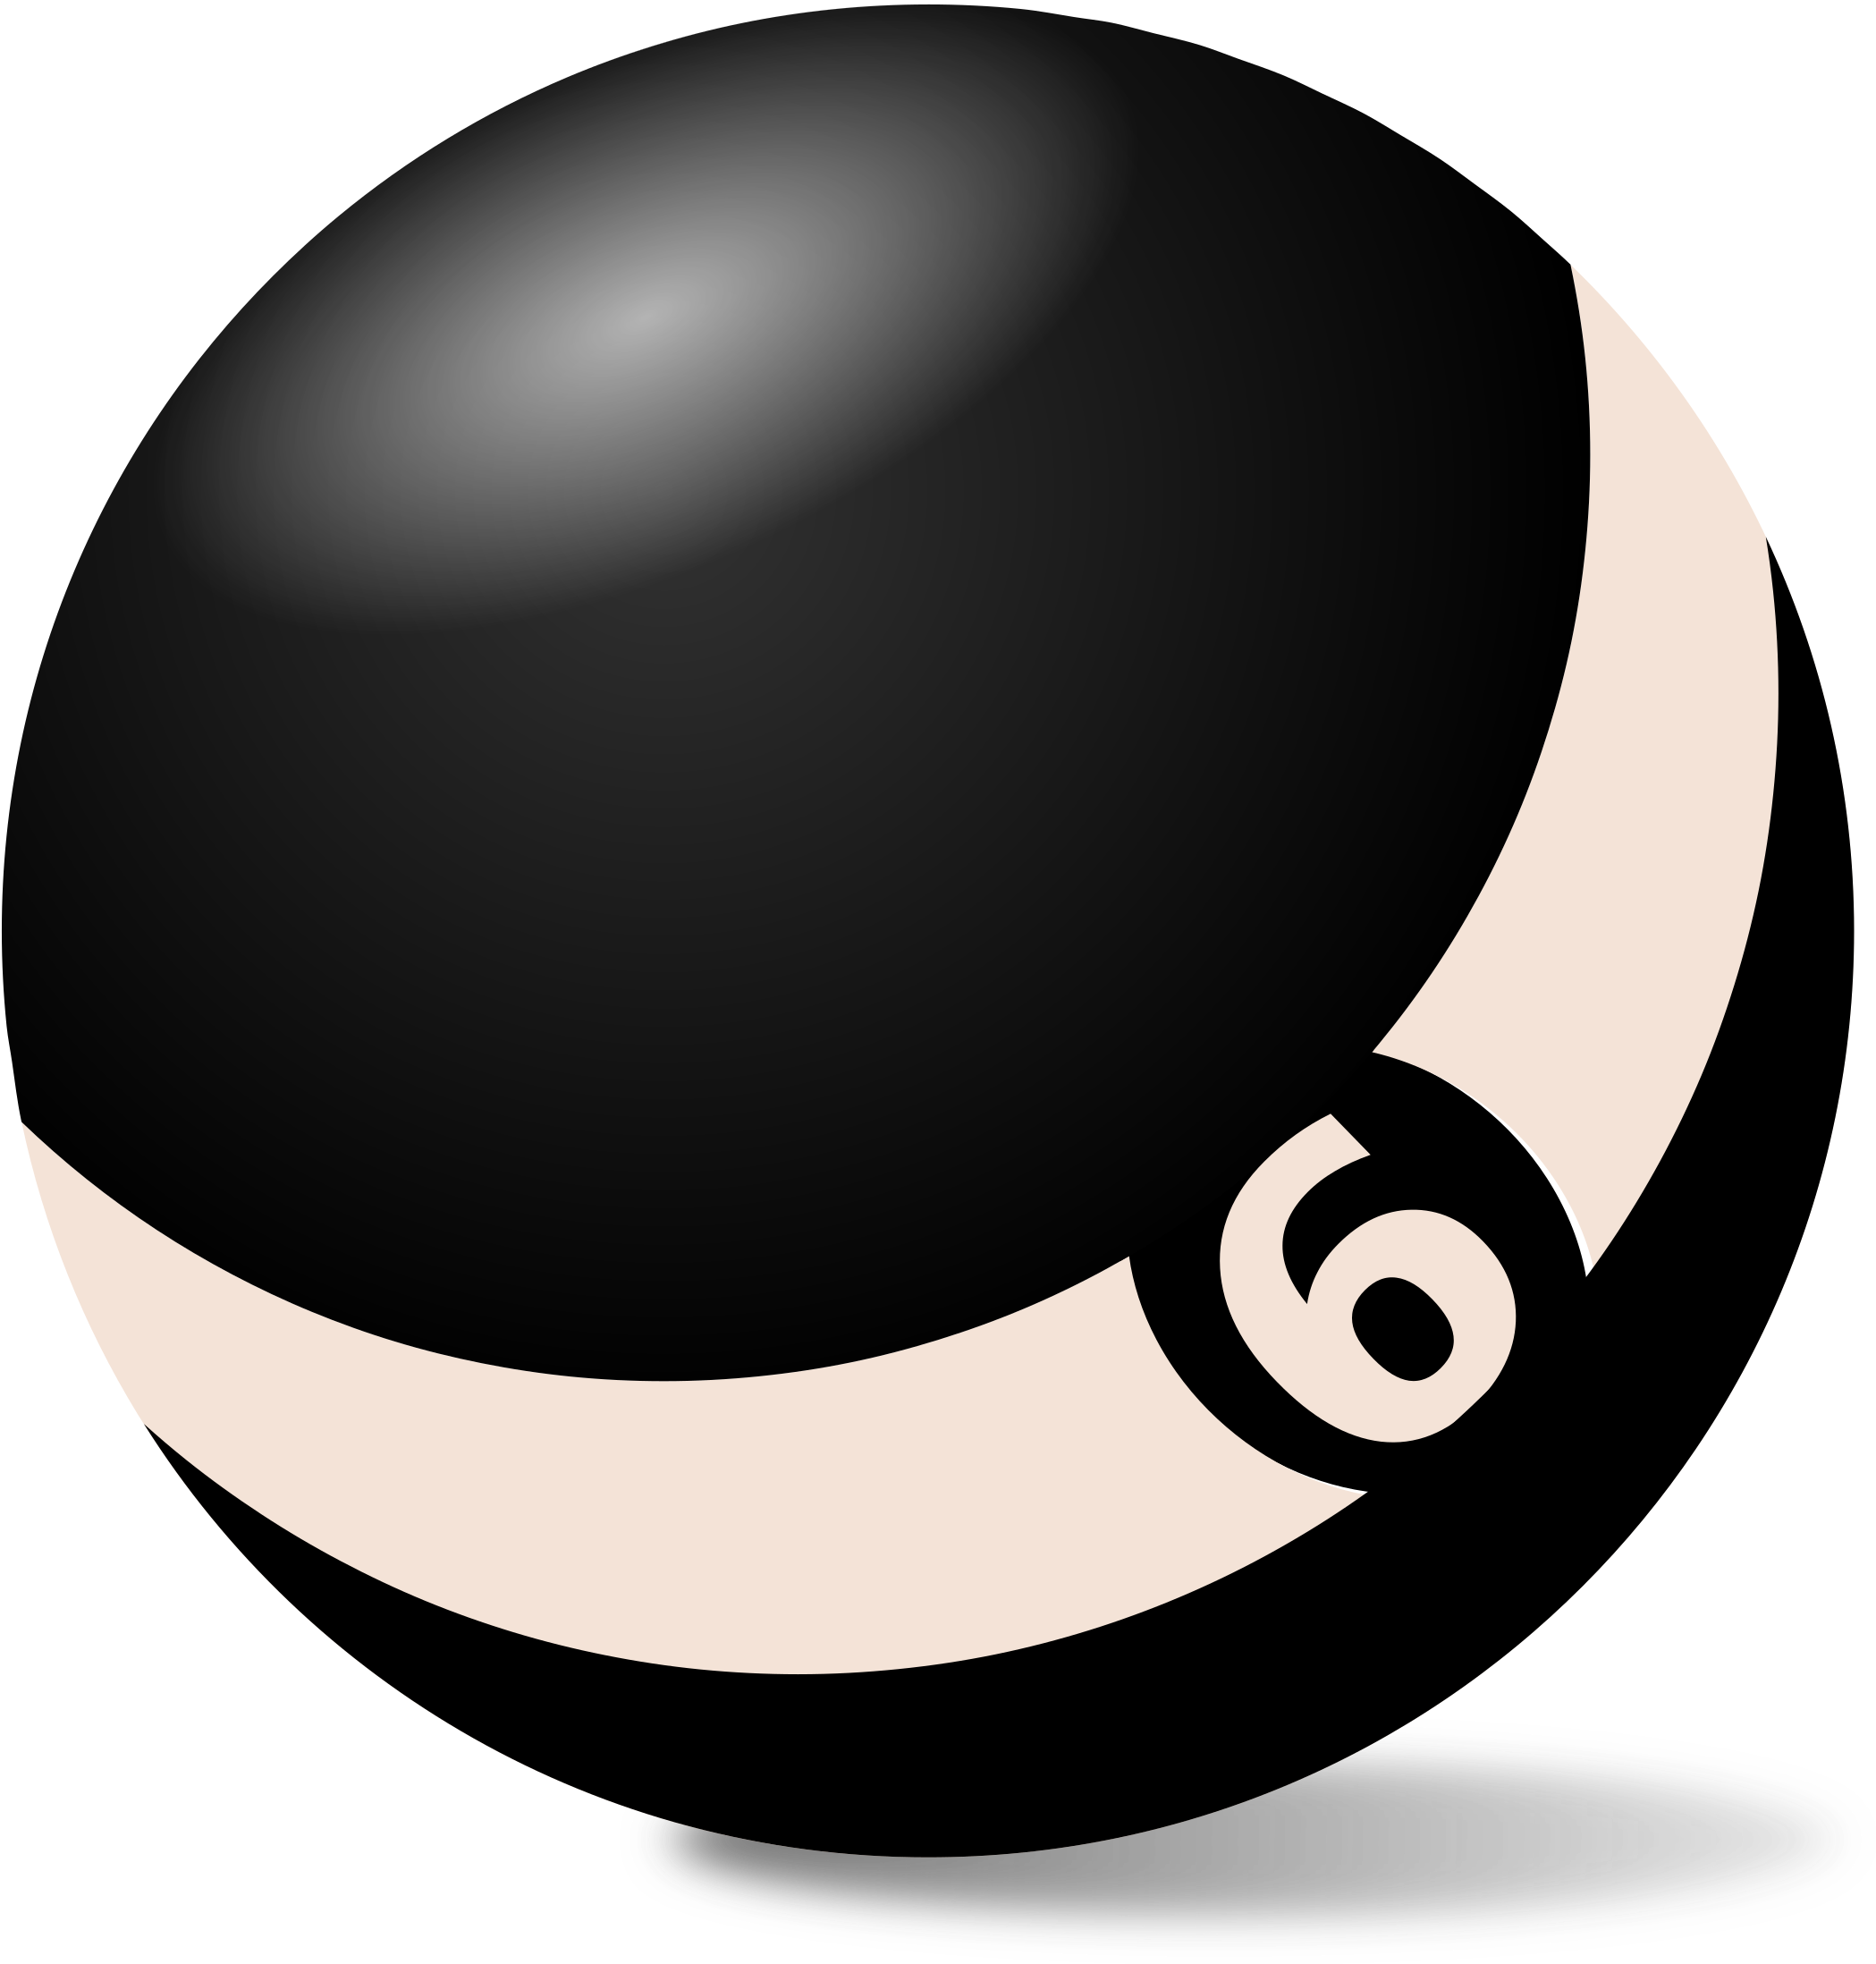 Big Image - Billiard Ball (2169x2400)